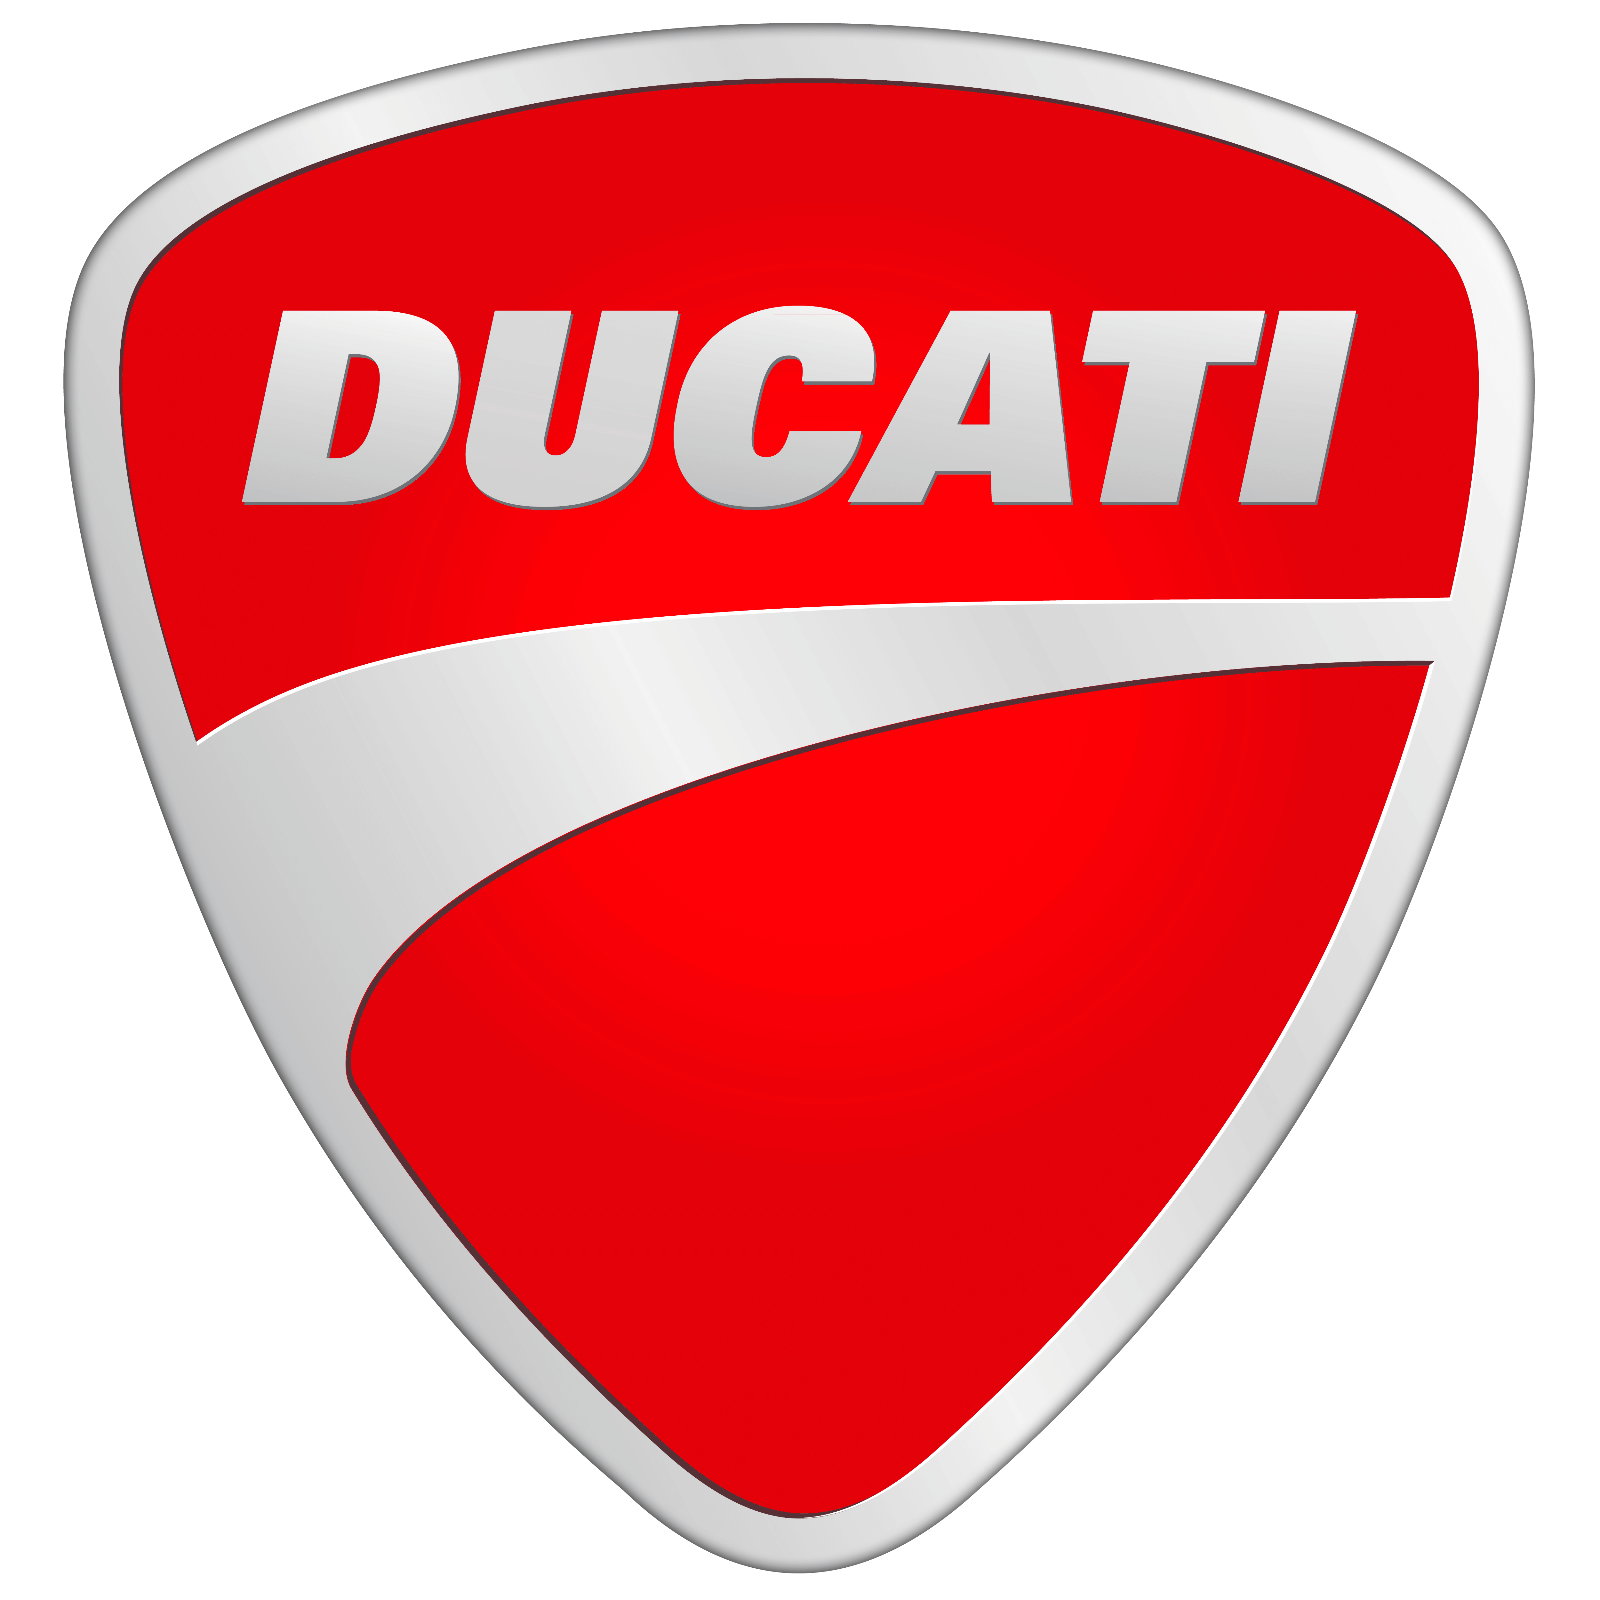 Ducati Thunder Motorcycle Helmet 98102737 Arai NEW size Medium in Stock O.E.